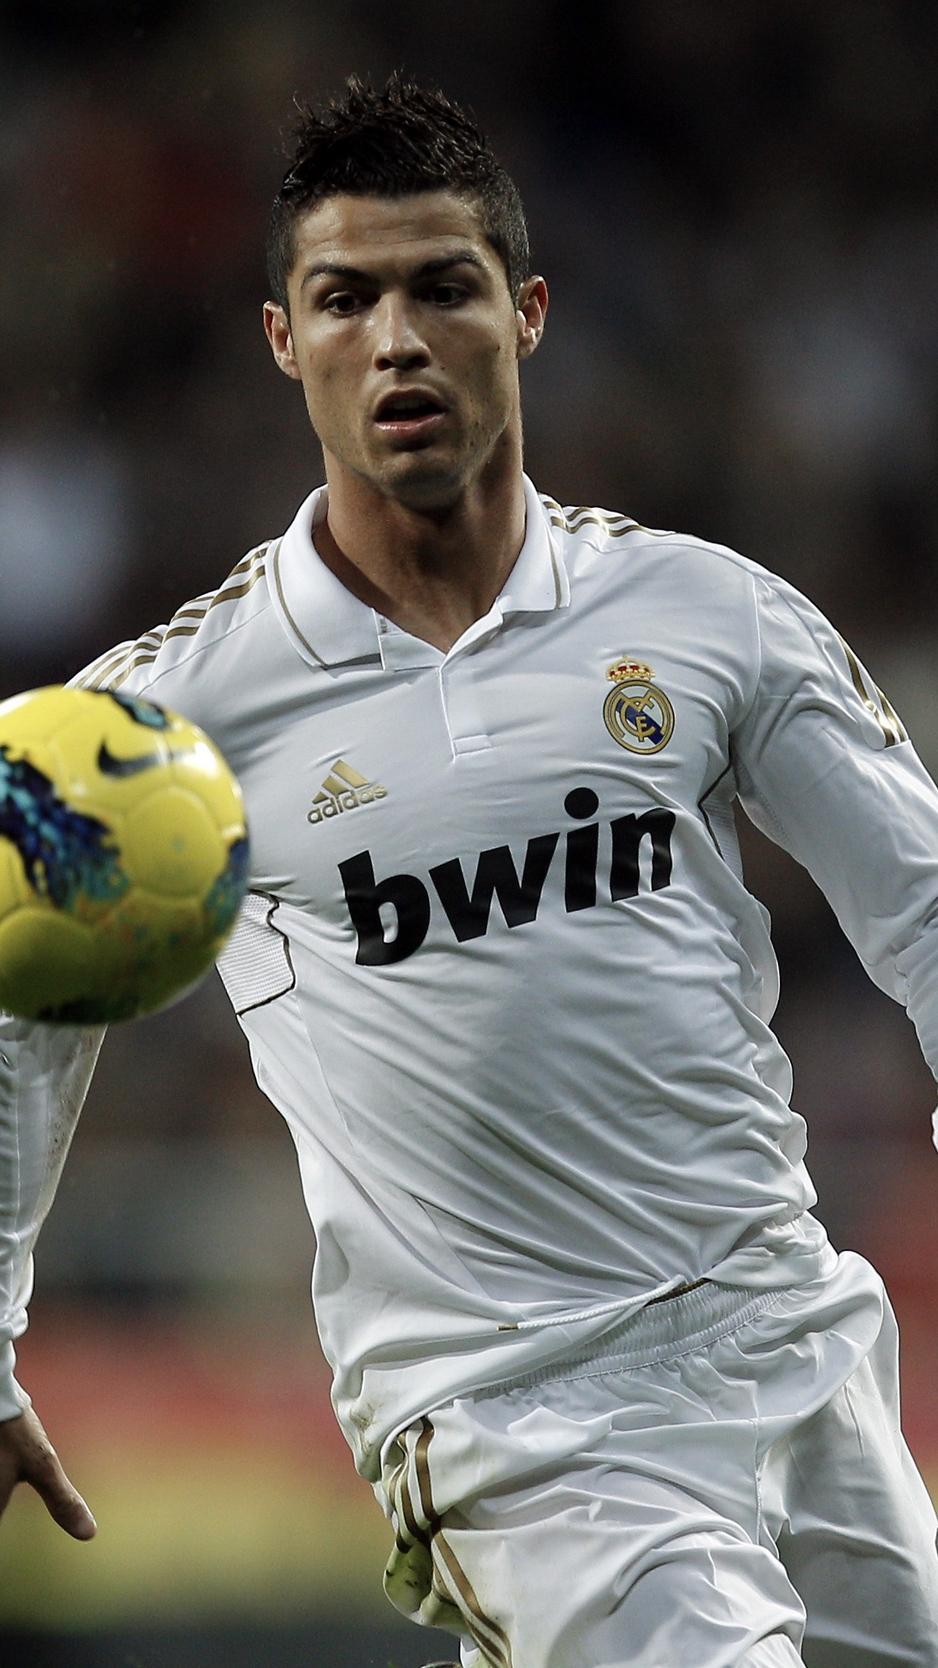 Cristiano Ronaldo Real Madrid iPhone Wallpapers ...